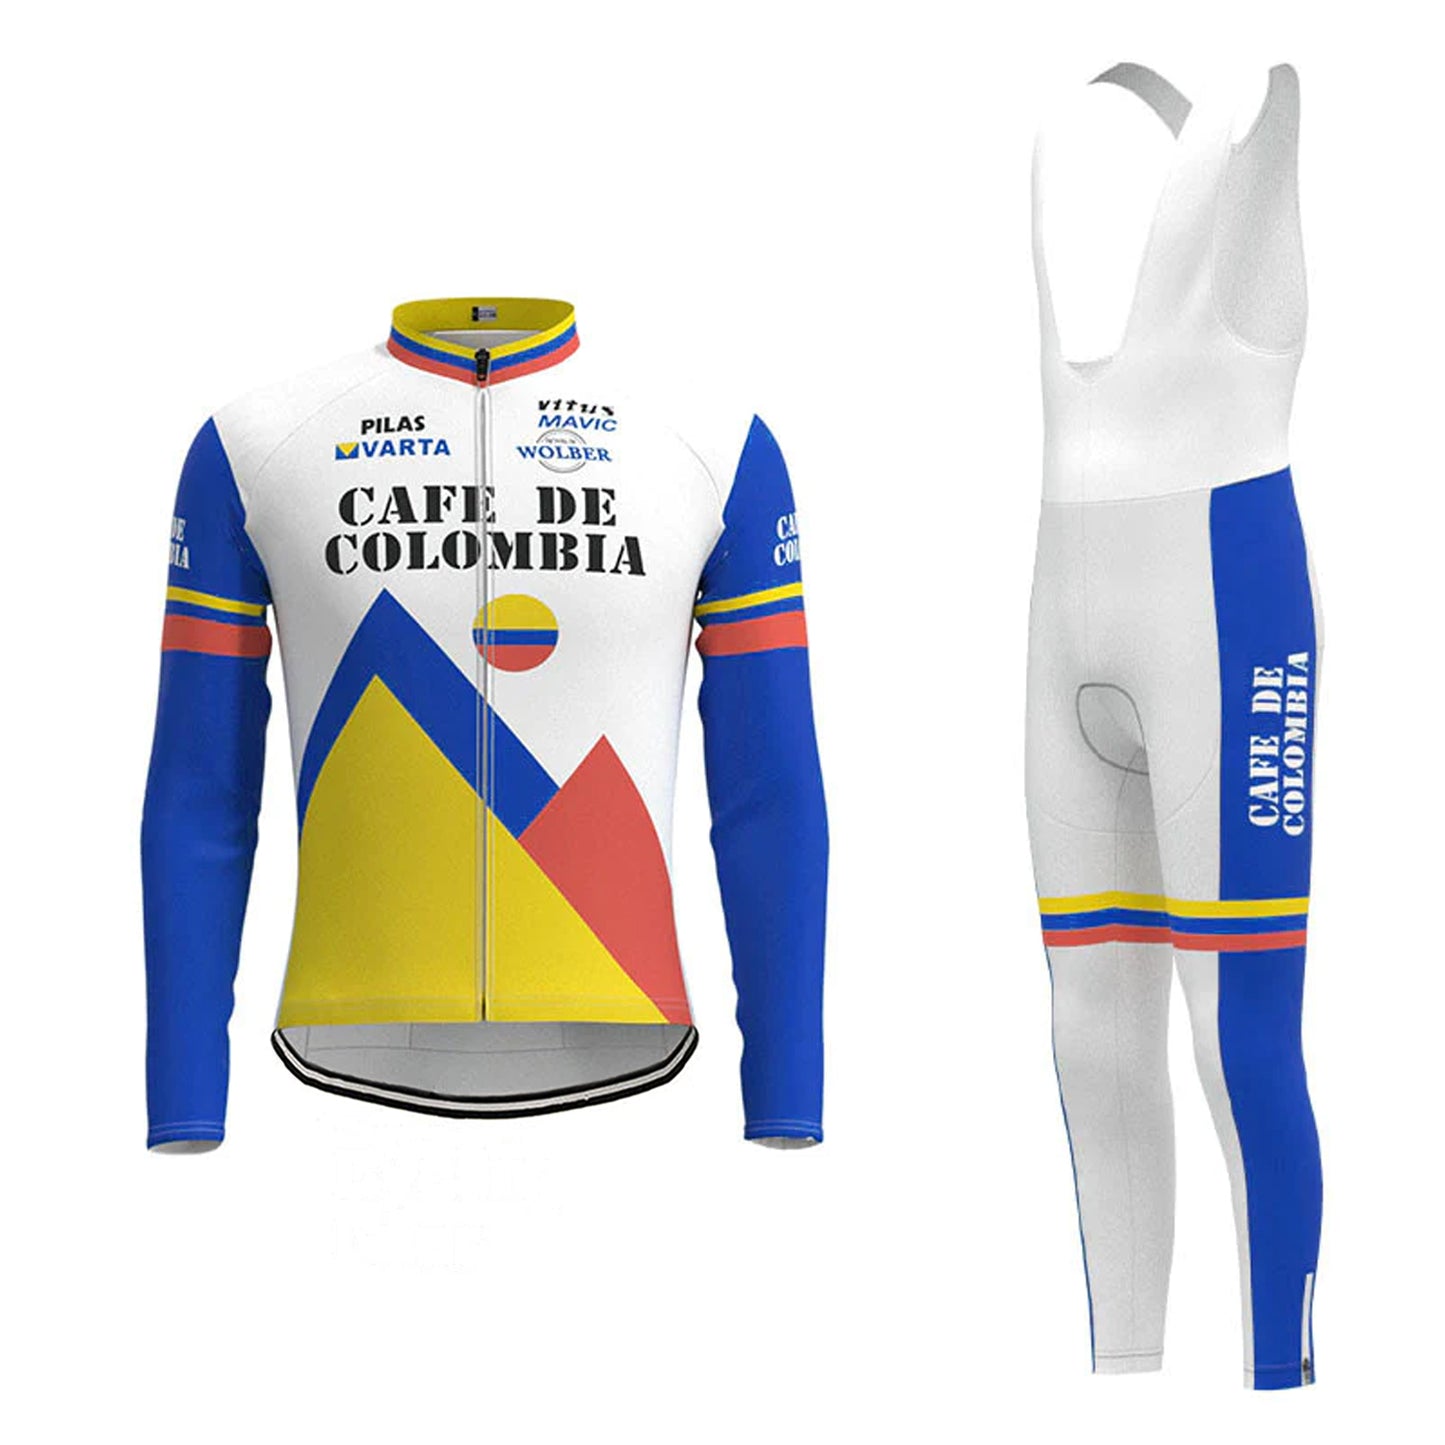 Café de Colombia Yellow Long Sleeve Cycling Jersey Matching Set